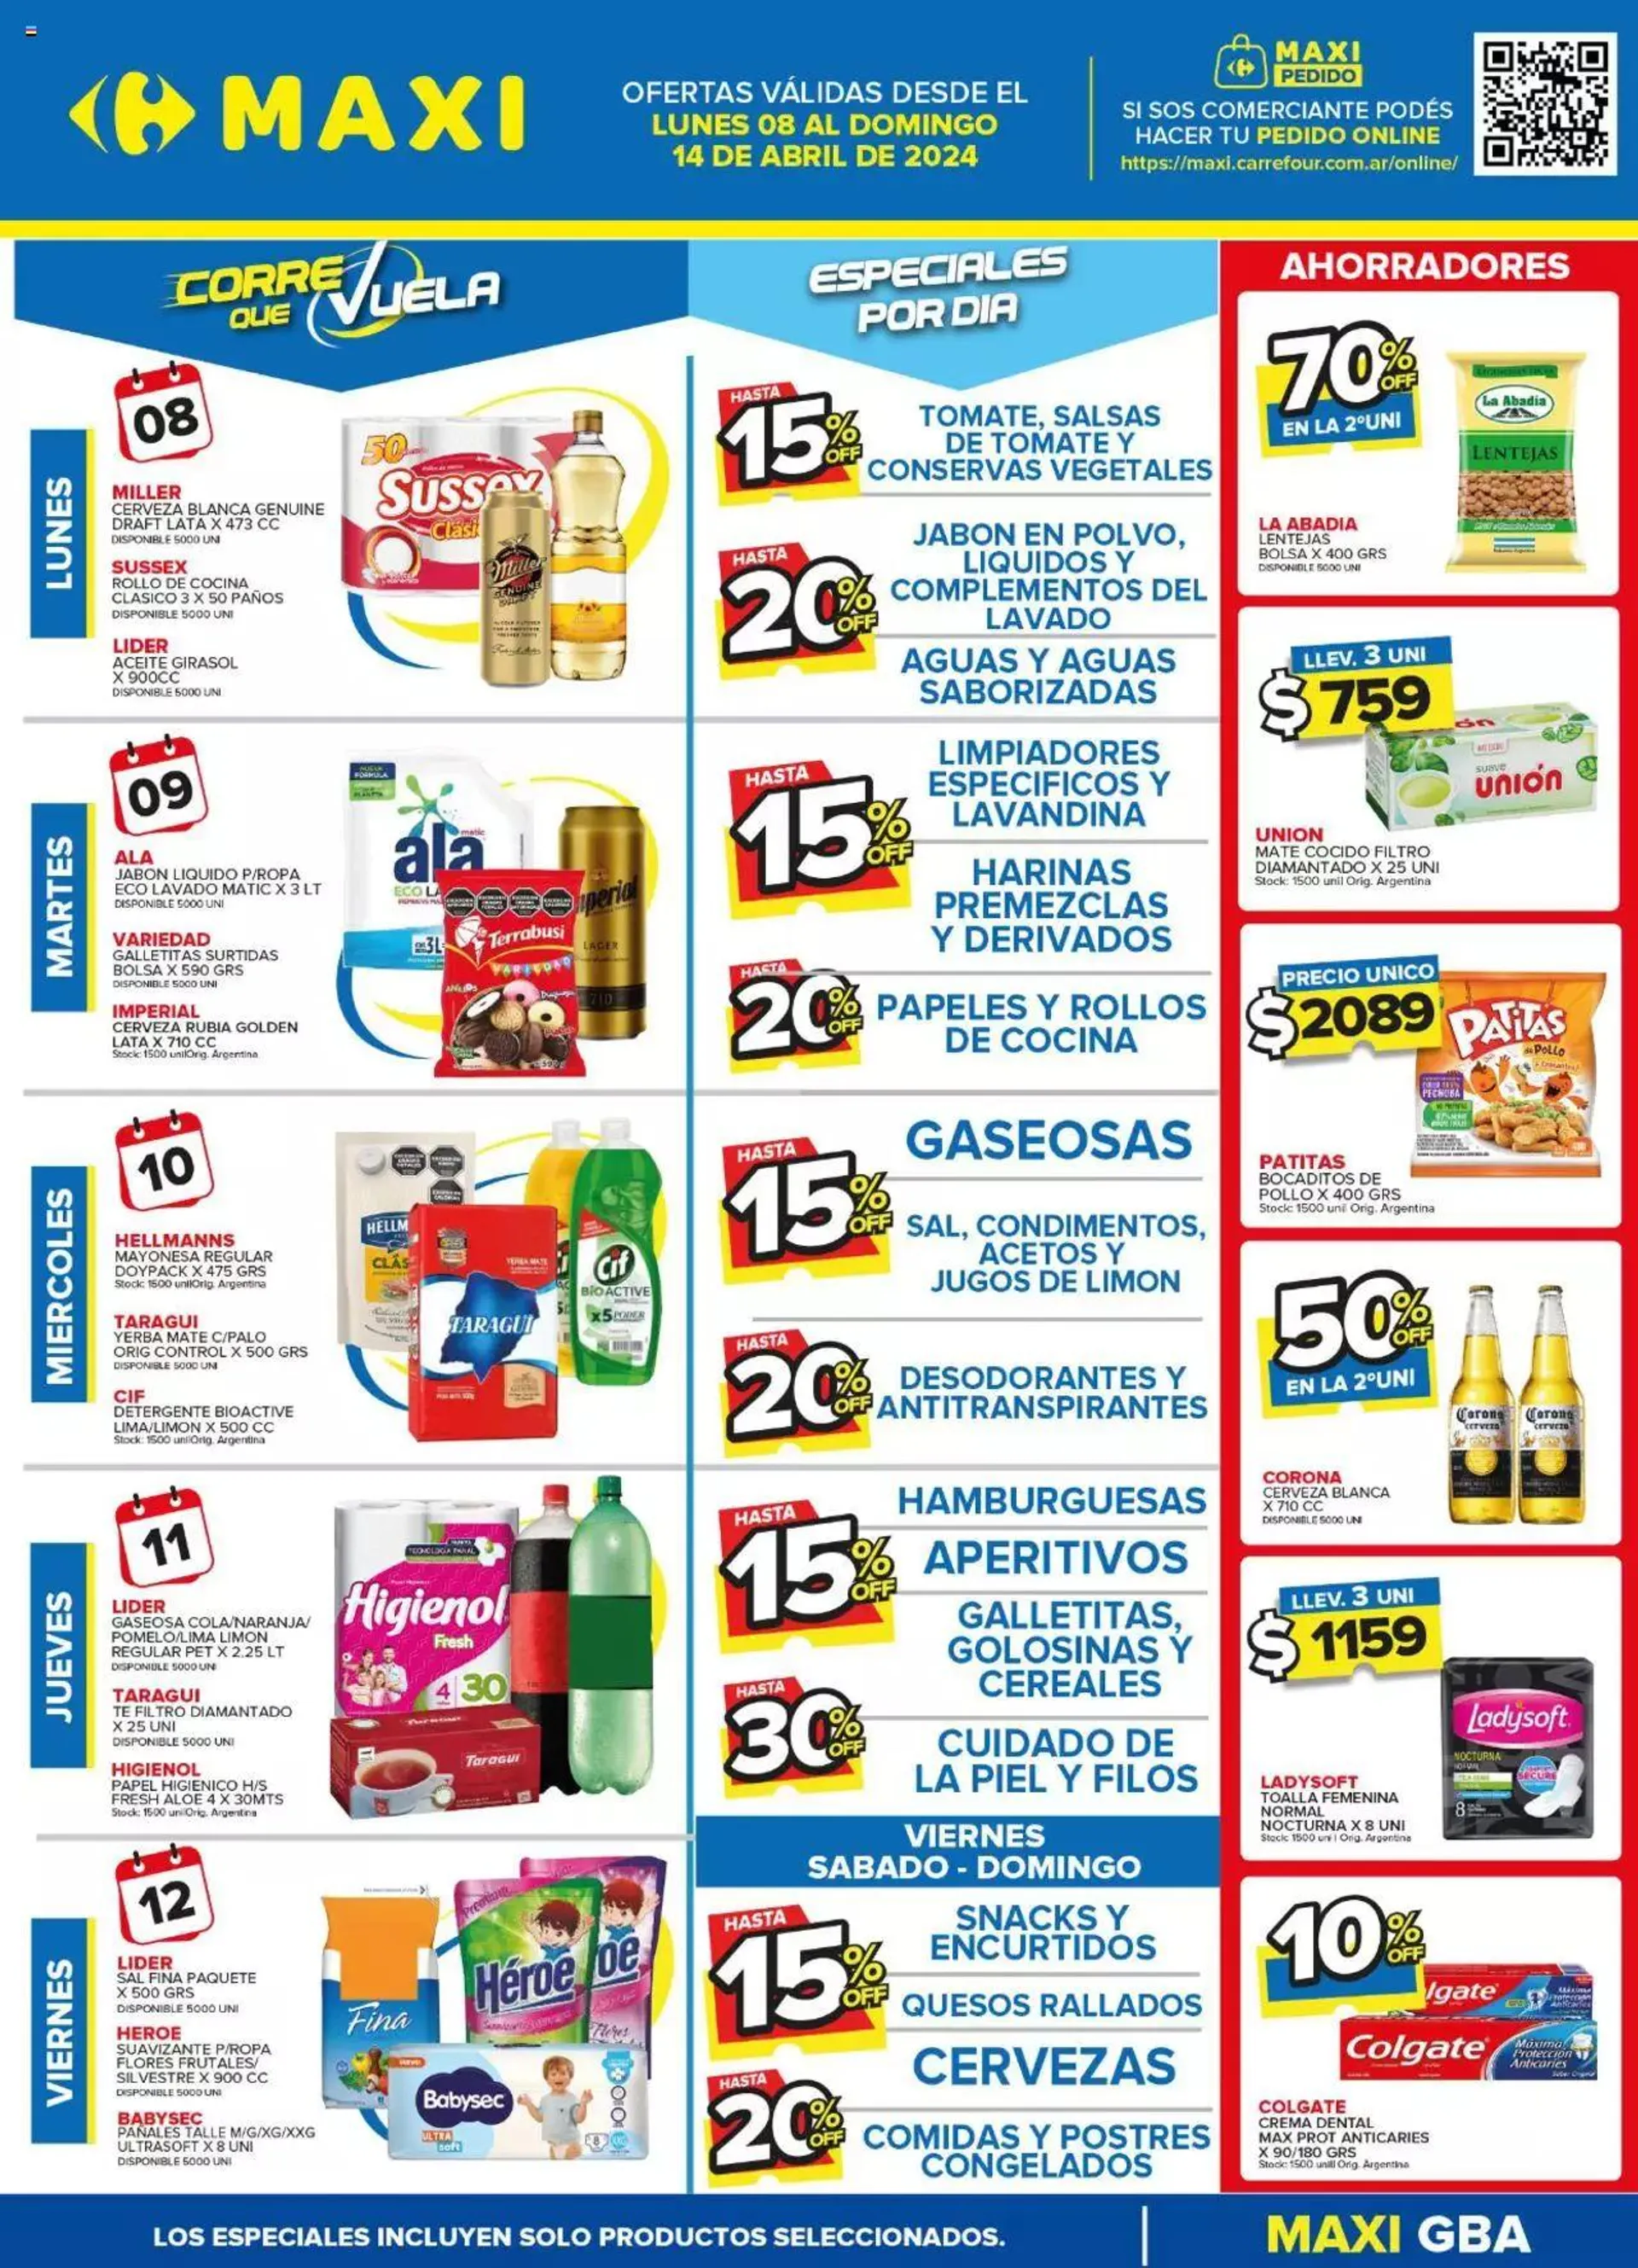 Ofertas de Carrefour Maxi catálogo 8 de abril al 14 de abril 2024 - Página 1 del catálogo